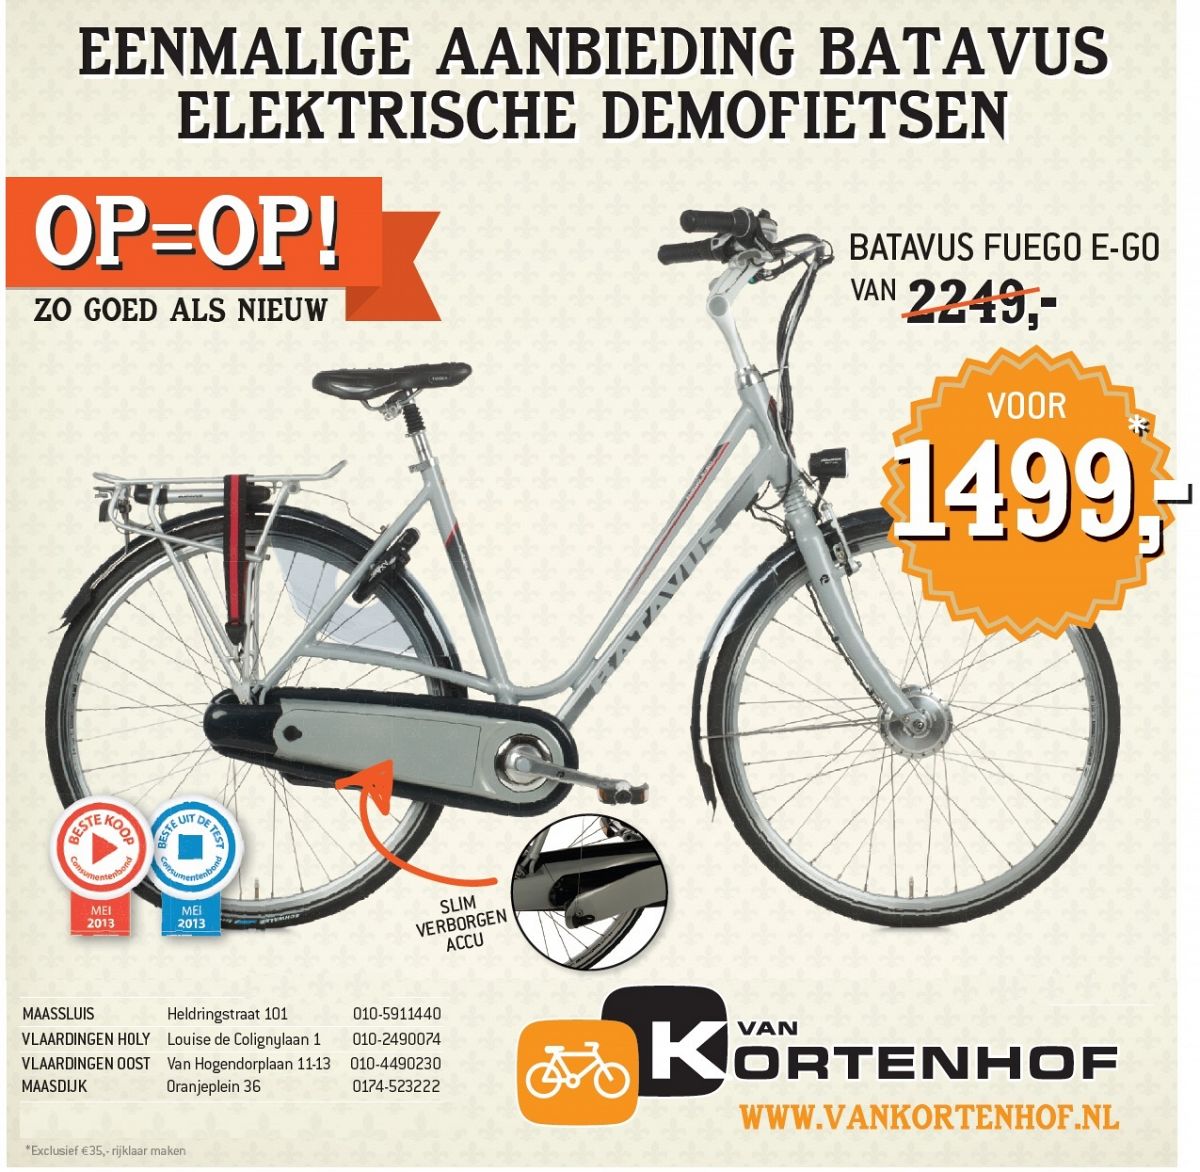 750 euro korting Batavus E-bike! | Vlaardingen24